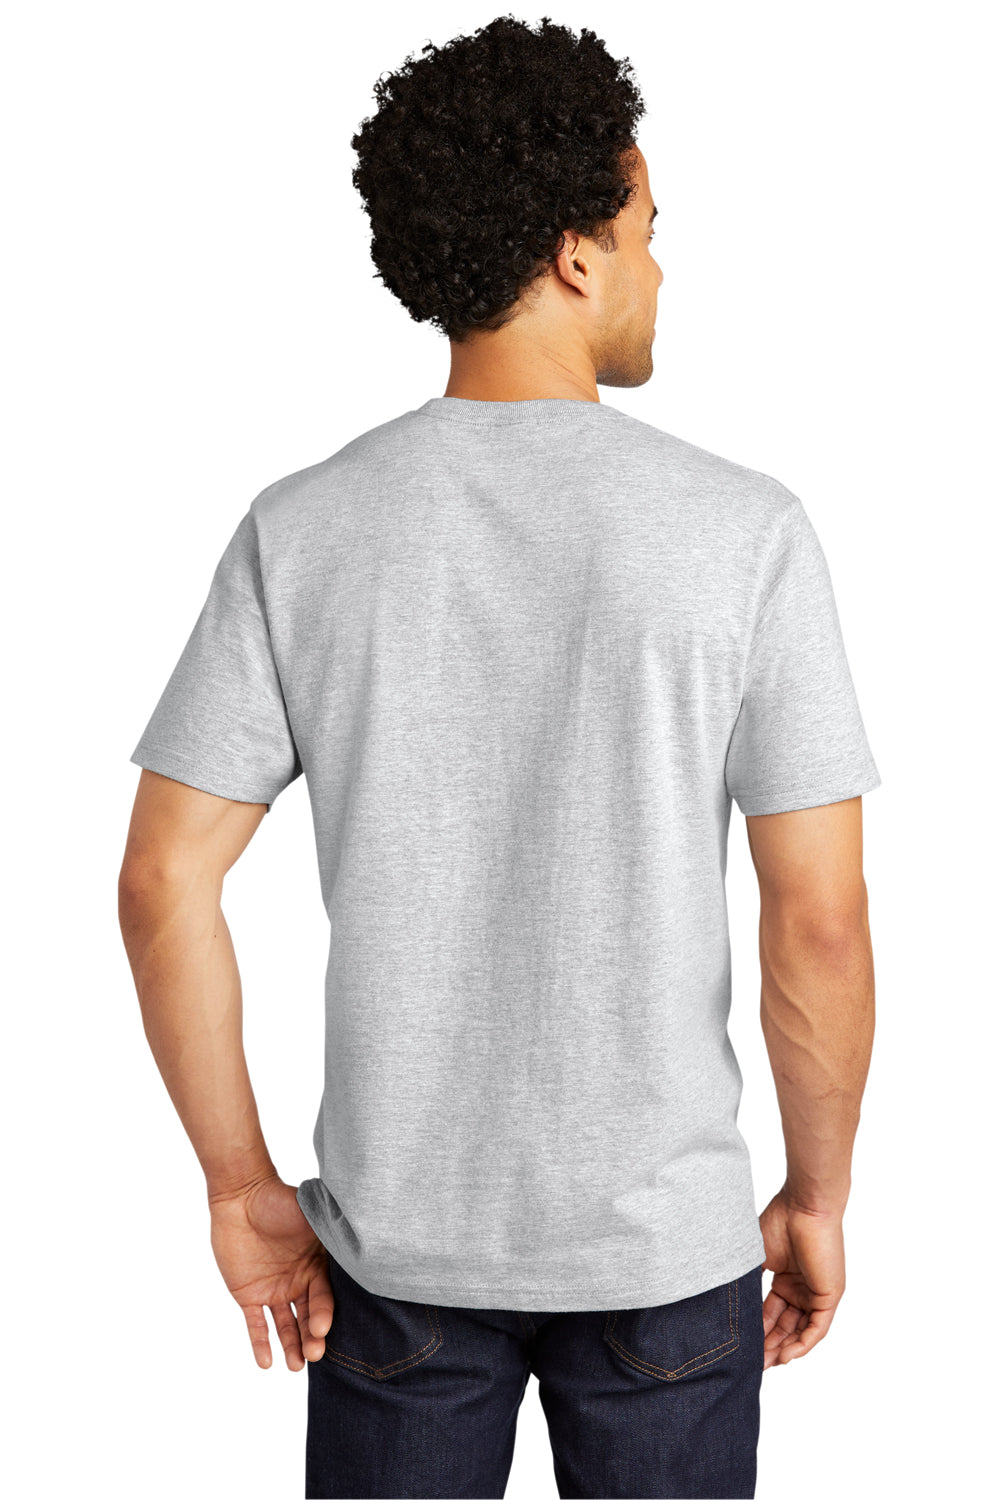 Port & Company Mens Bouncer Short Sleeve Crewneck T-Shirt Ash Grey Side